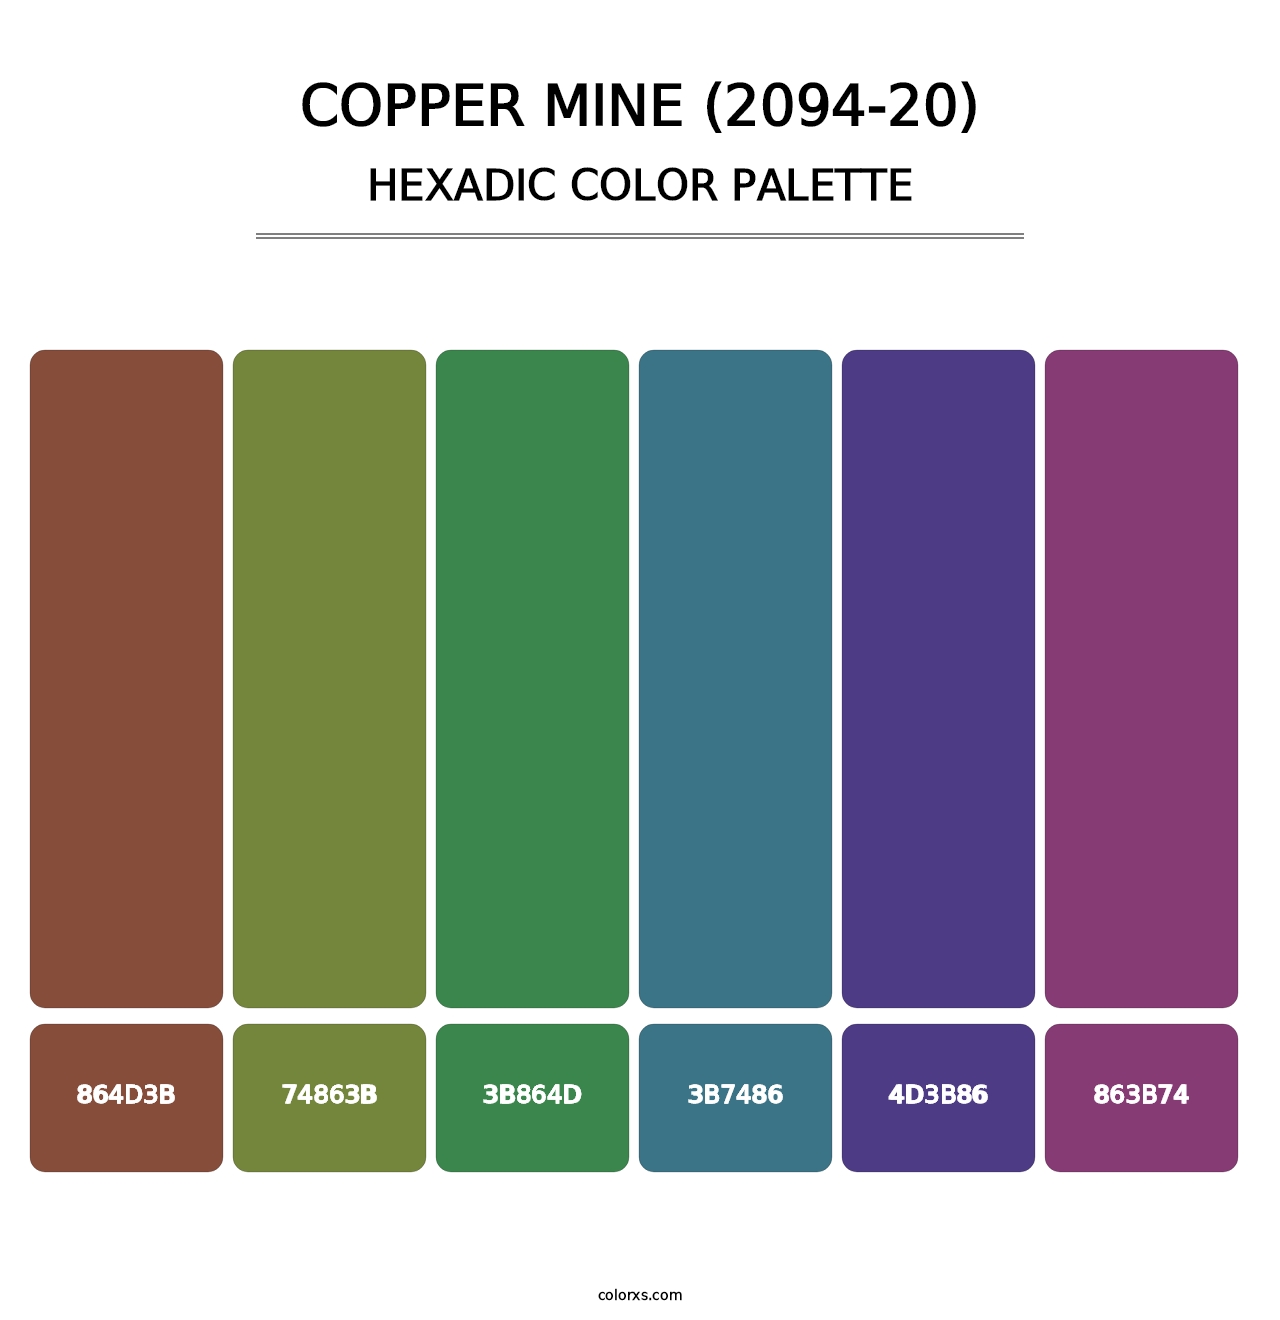 Copper Mine (2094-20) - Hexadic Color Palette